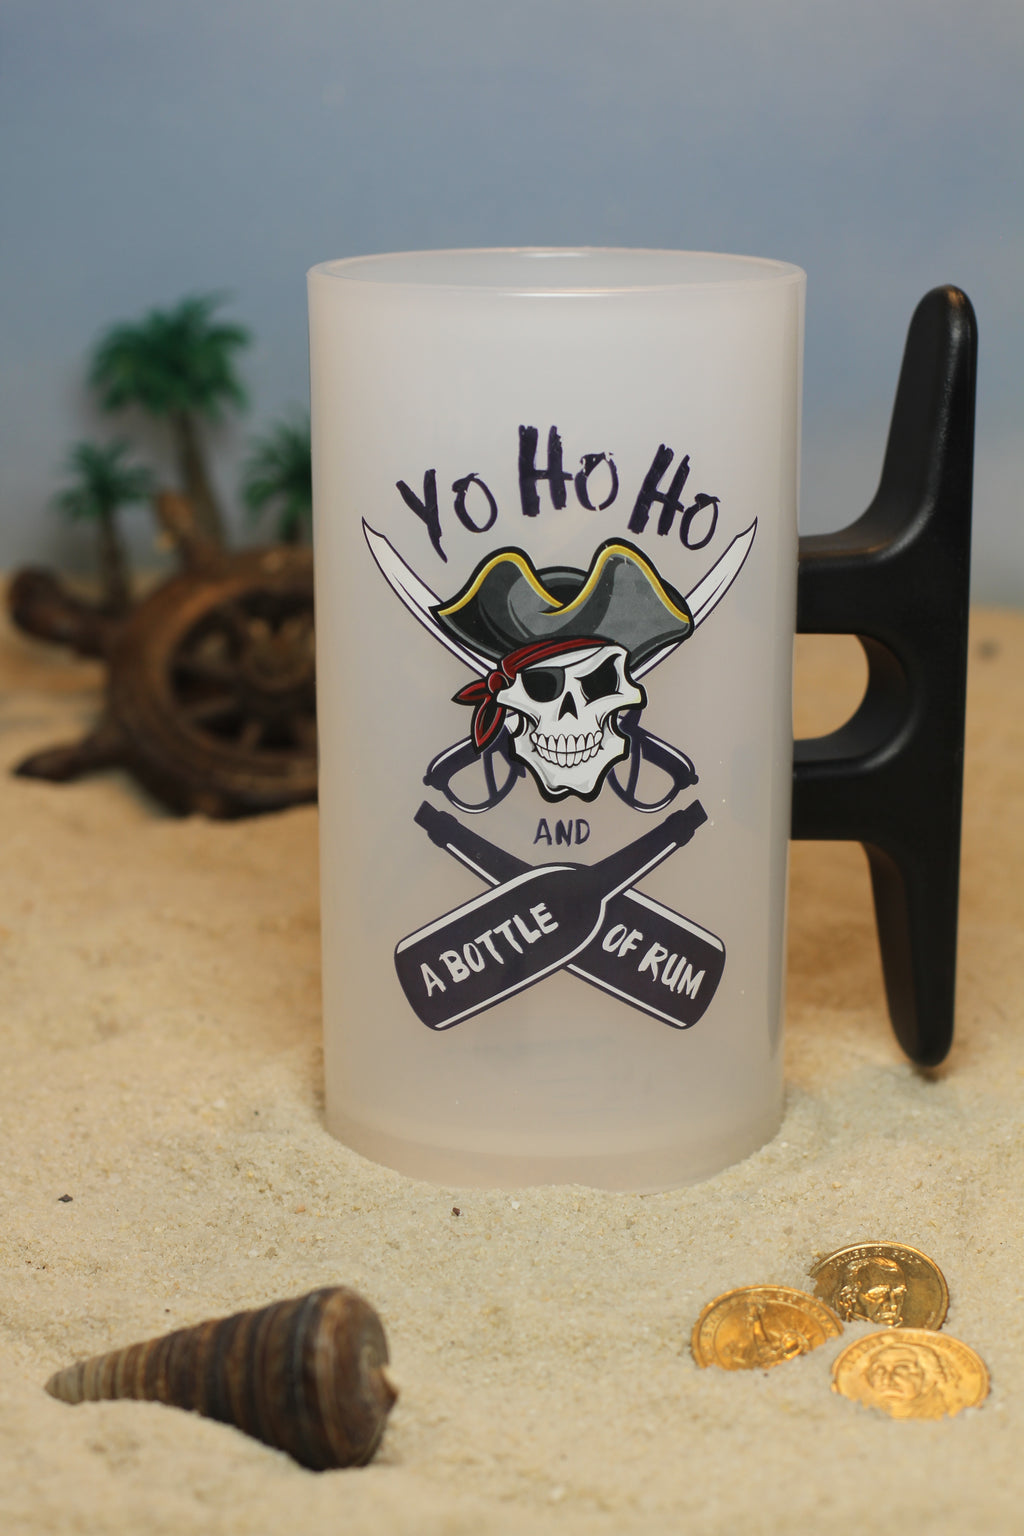 Drinking Rum Pirate Sticker - U.S. Custom Stickers